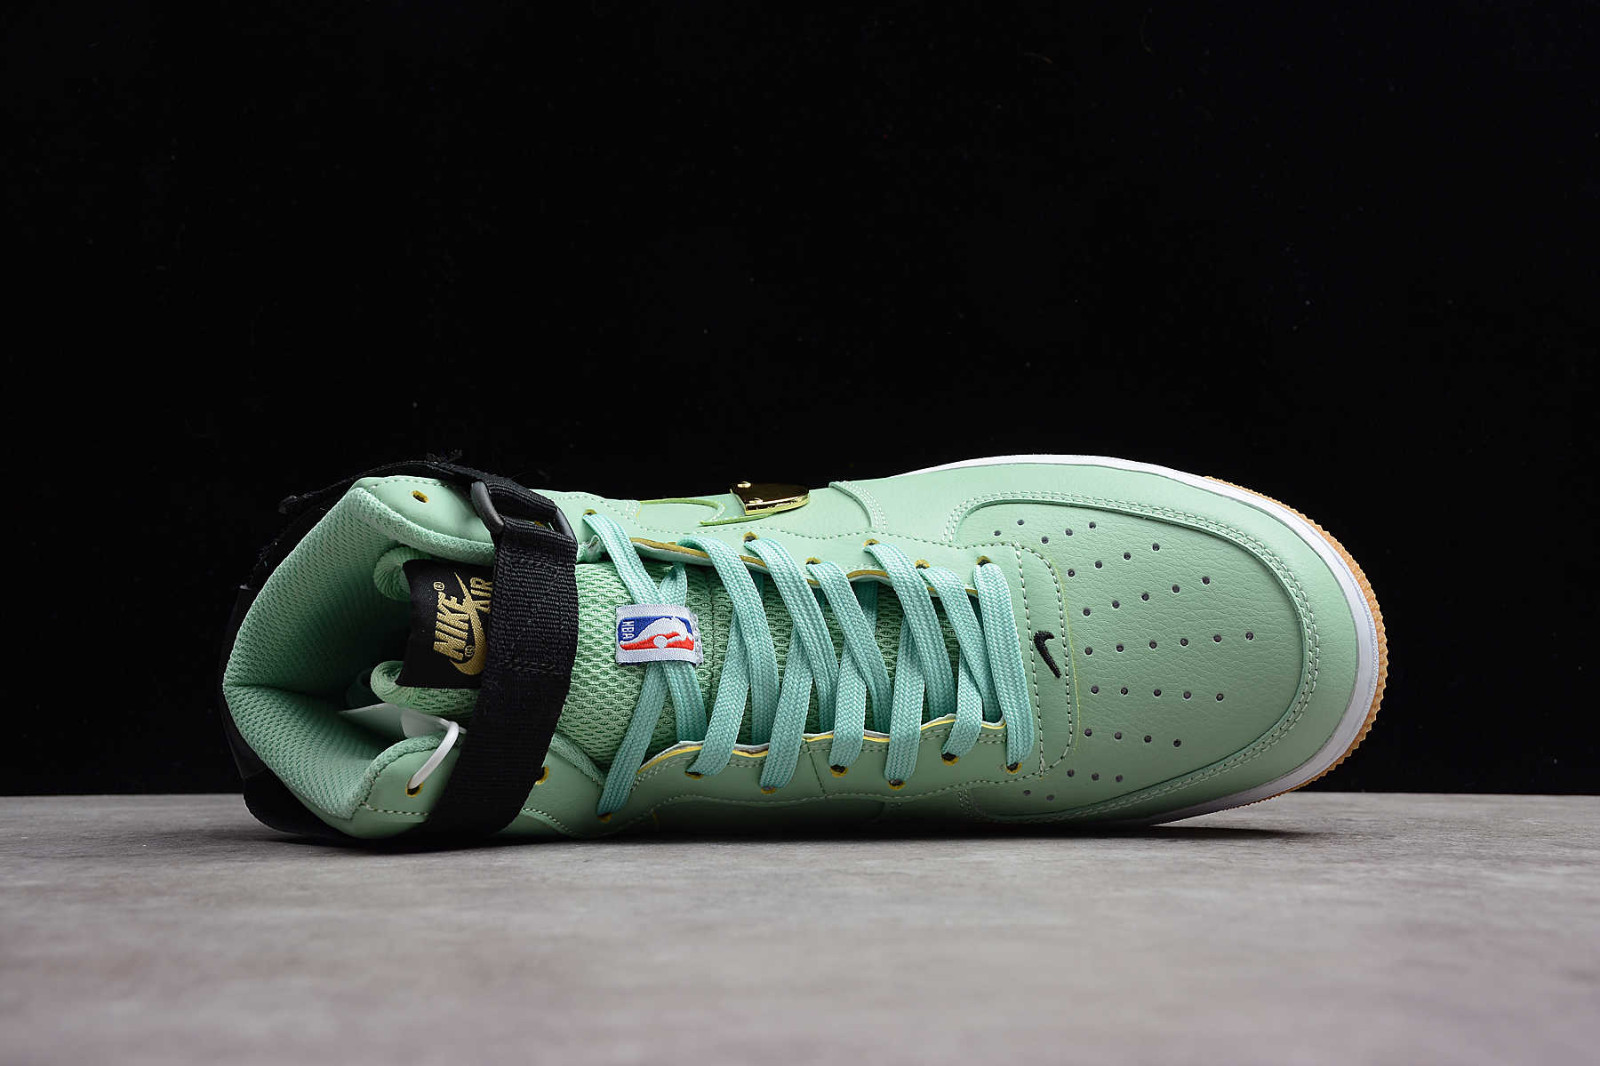 Nike NBA x Air Force 1 High 'Celtics' - CT2306-300